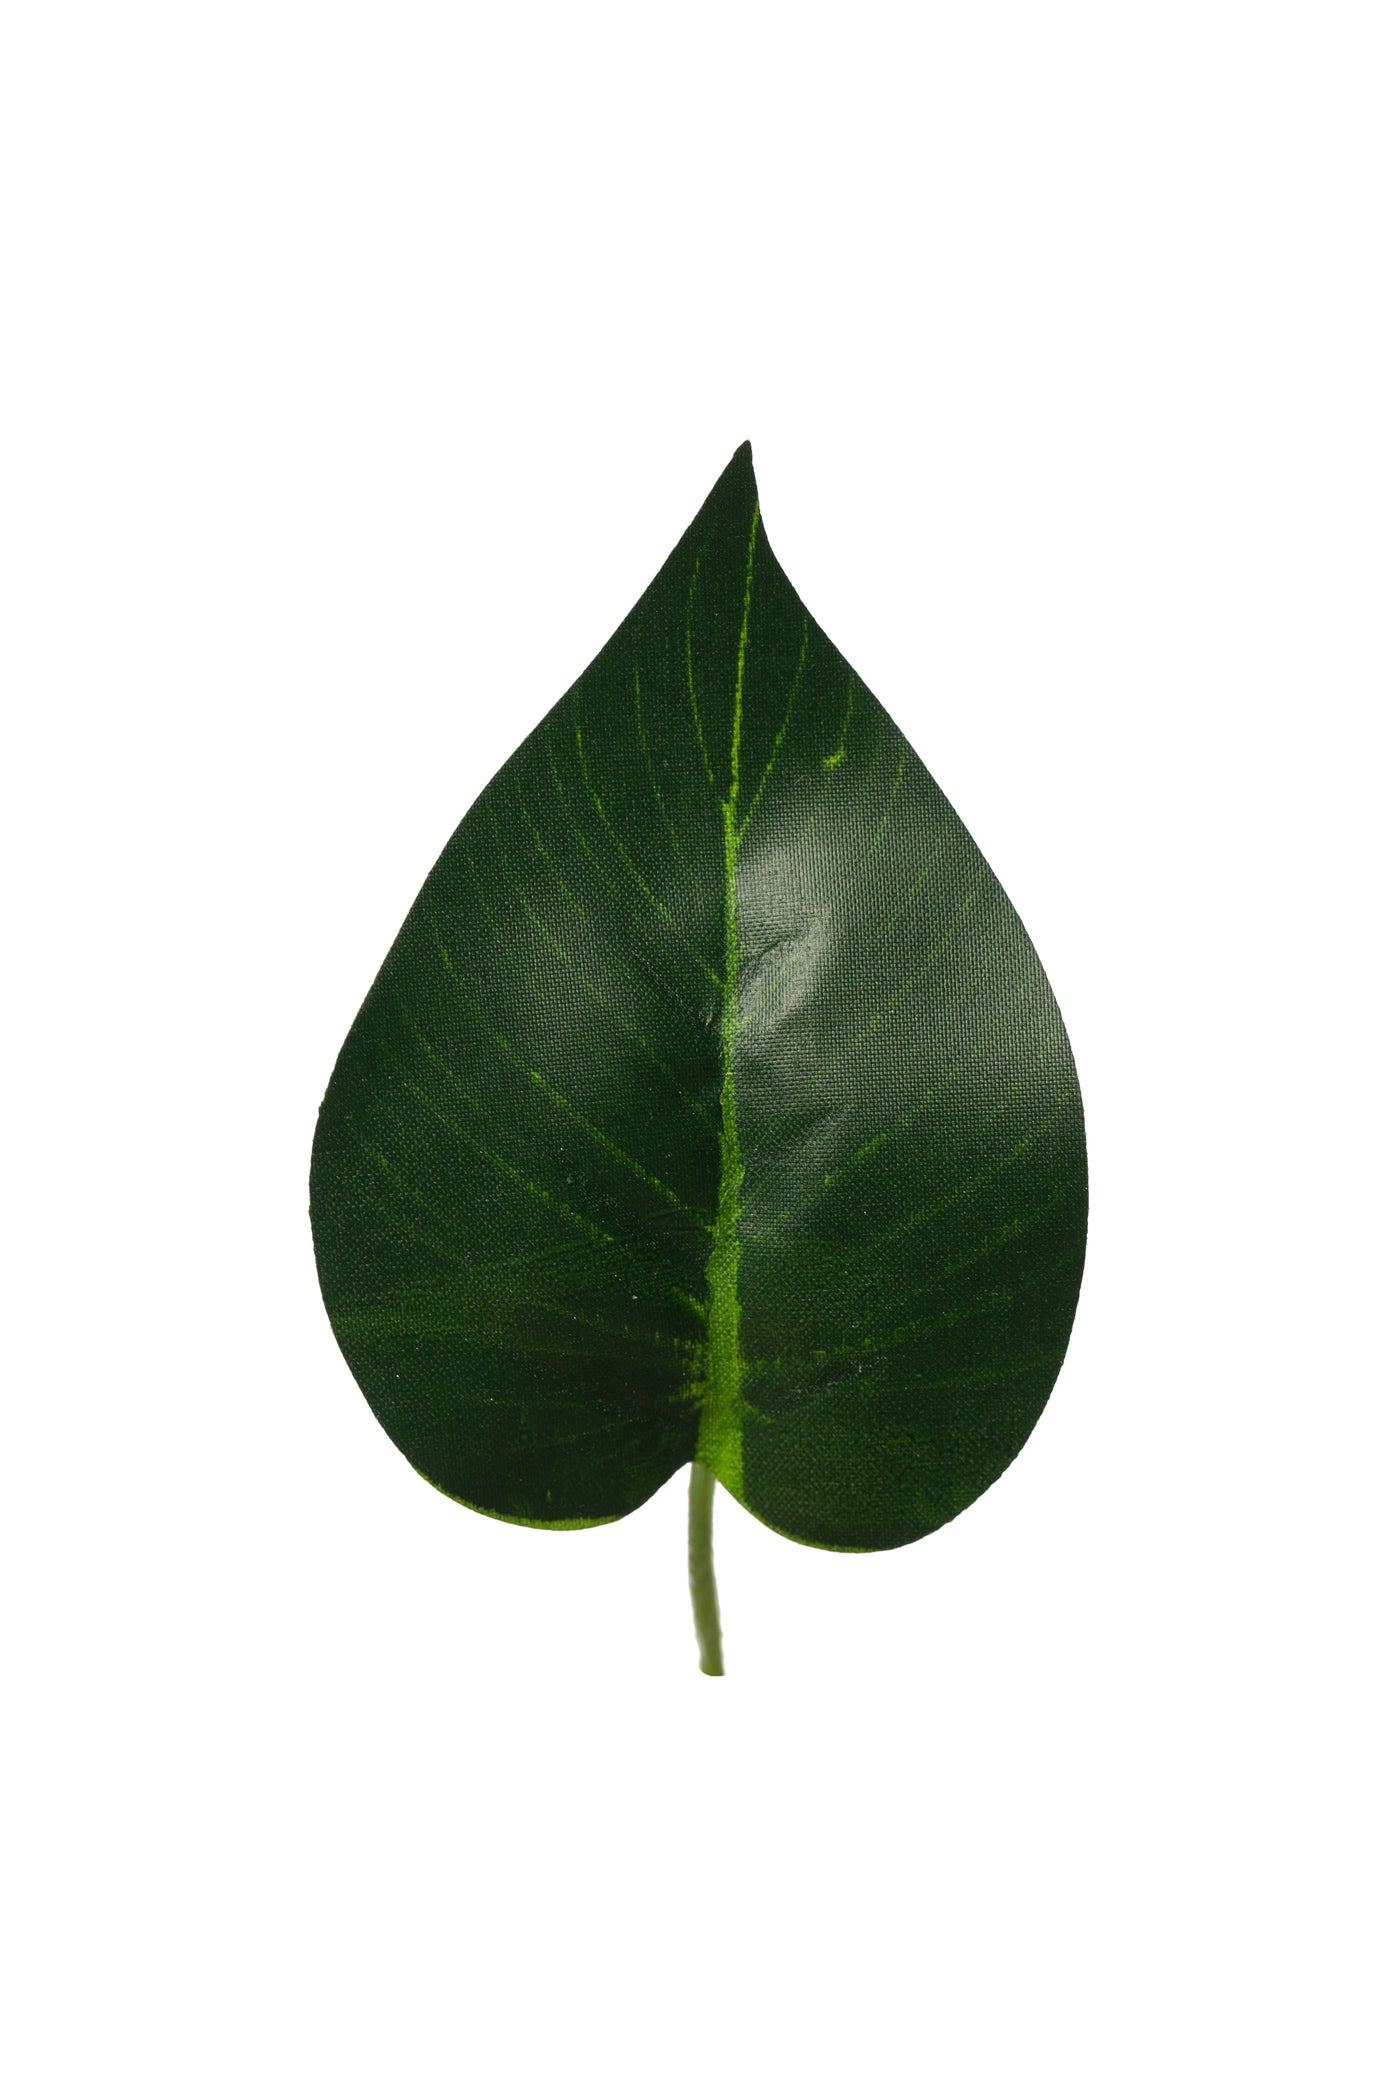 Ghirlanda artificiala scindapsus 170cm. 138 frunze. verde inchis